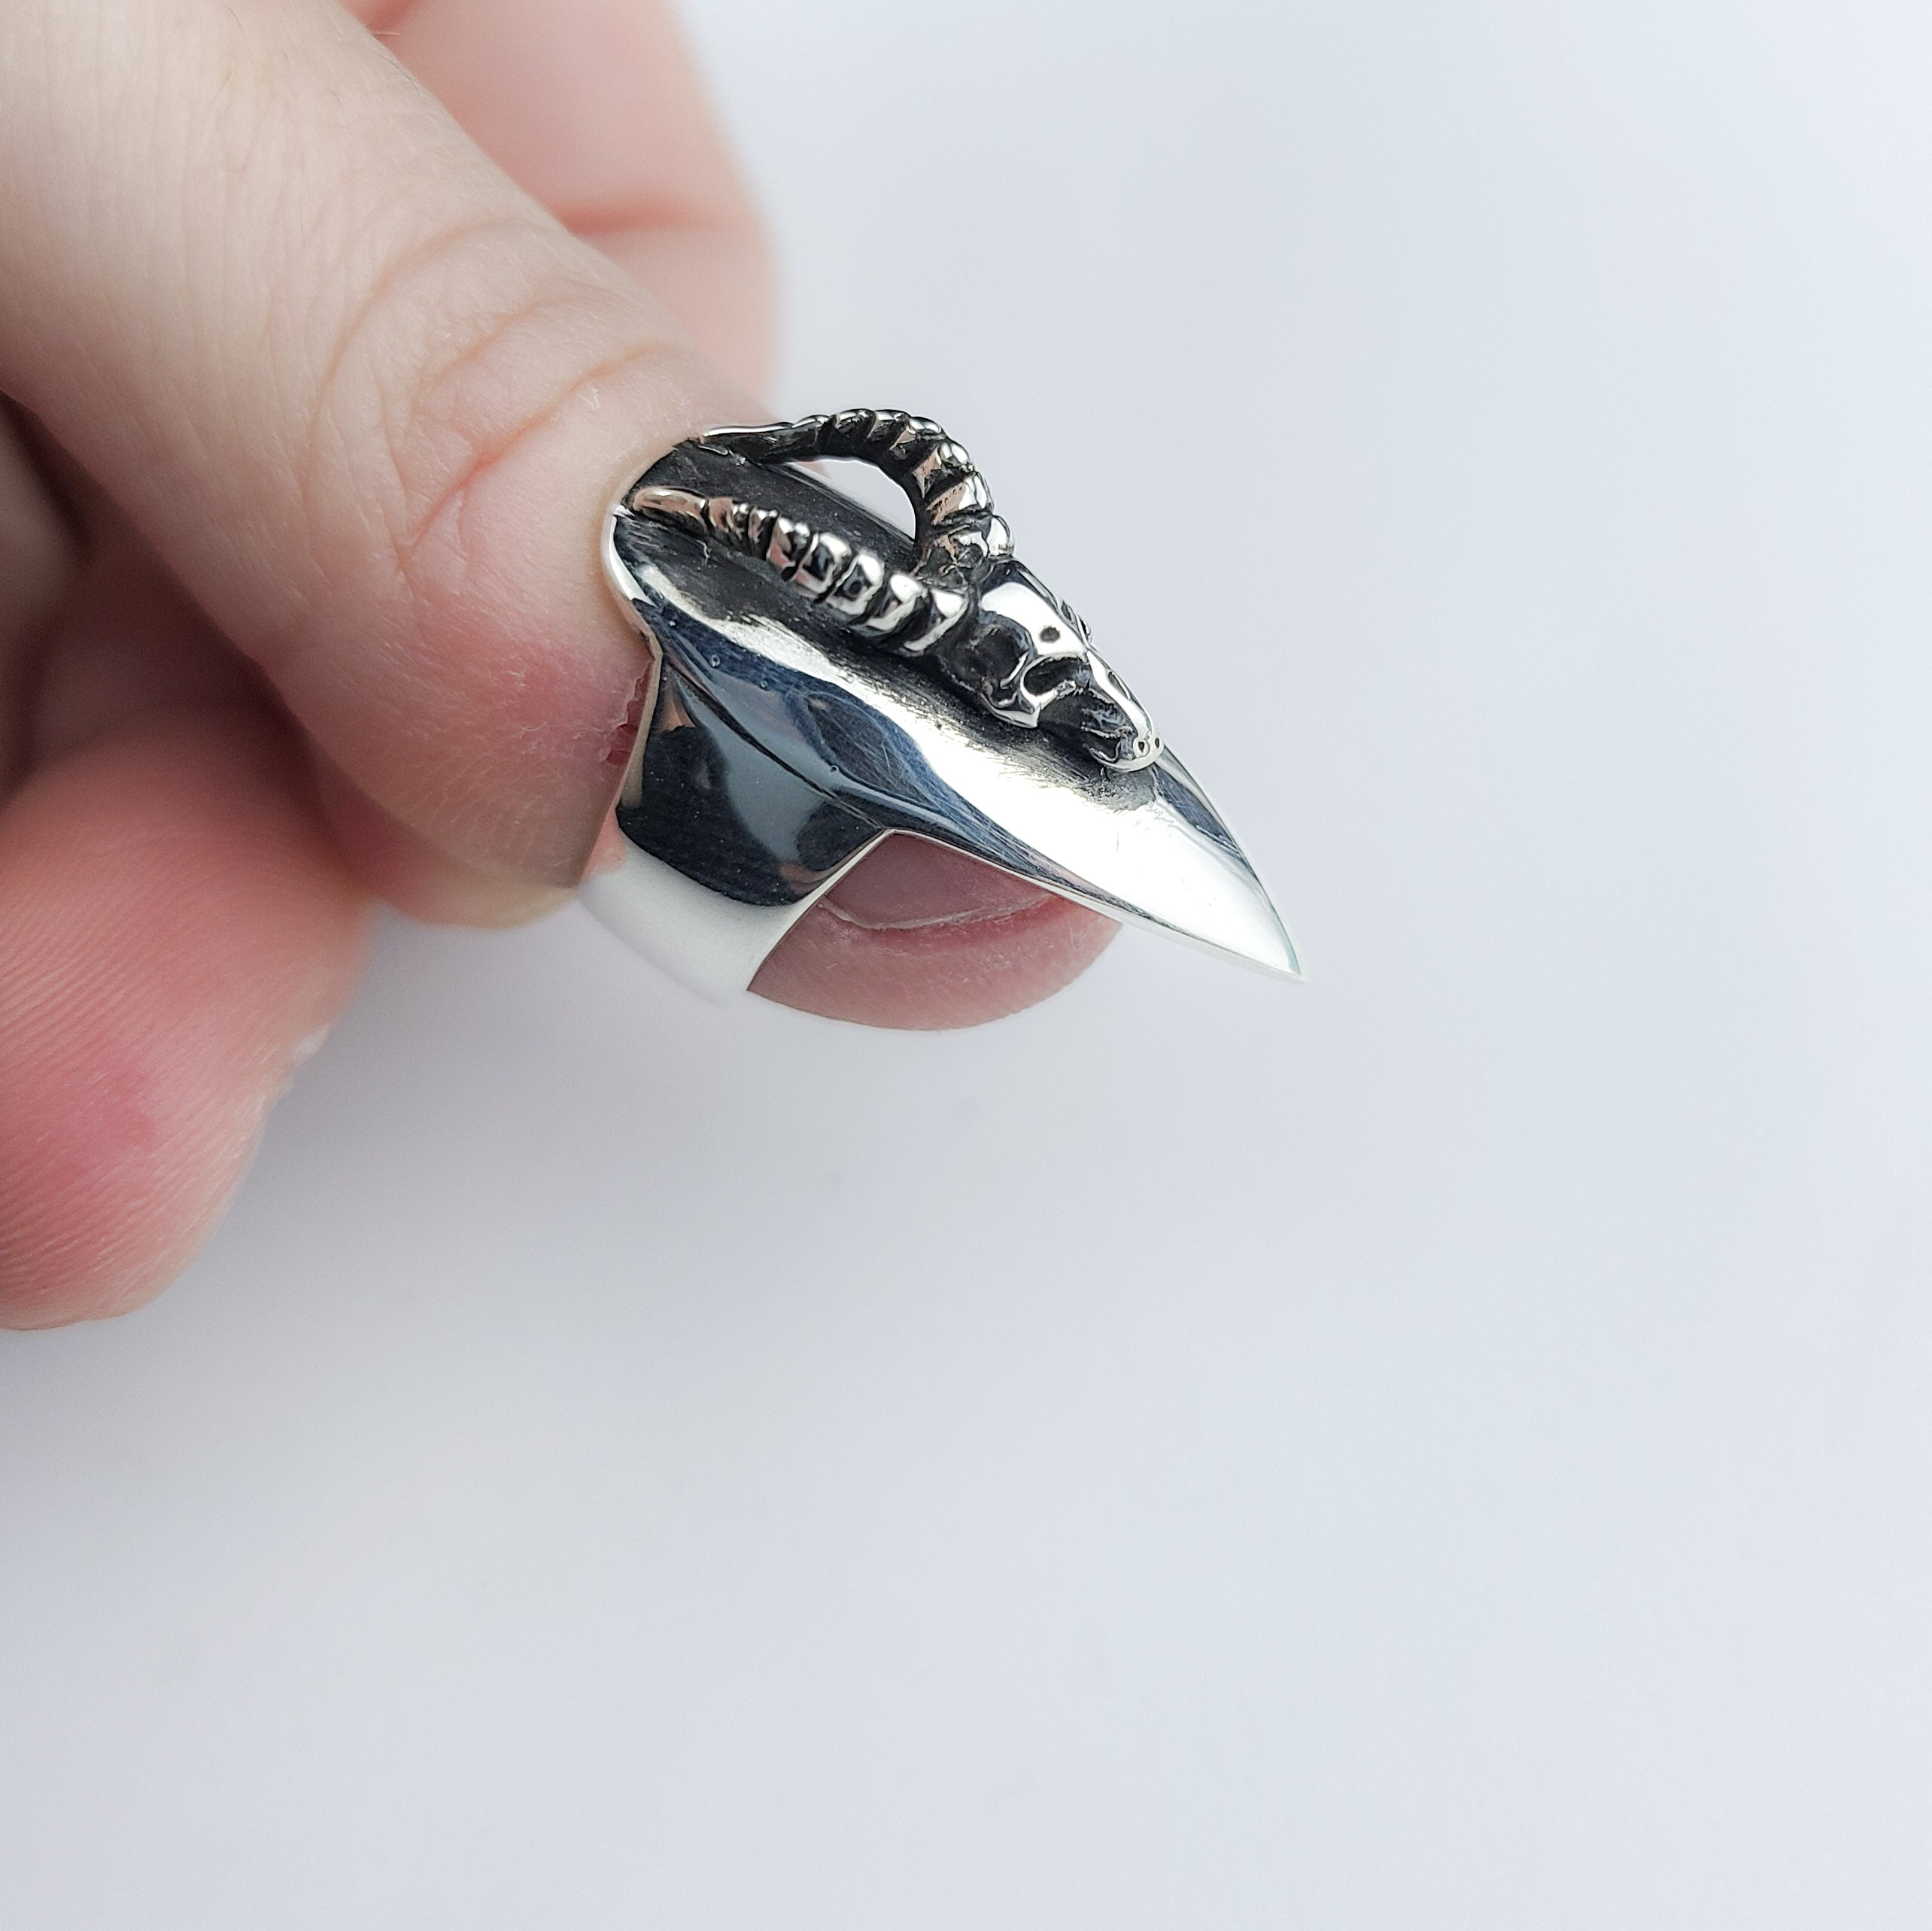 Demon Skull Stiletto Fake Nail Claw Ring